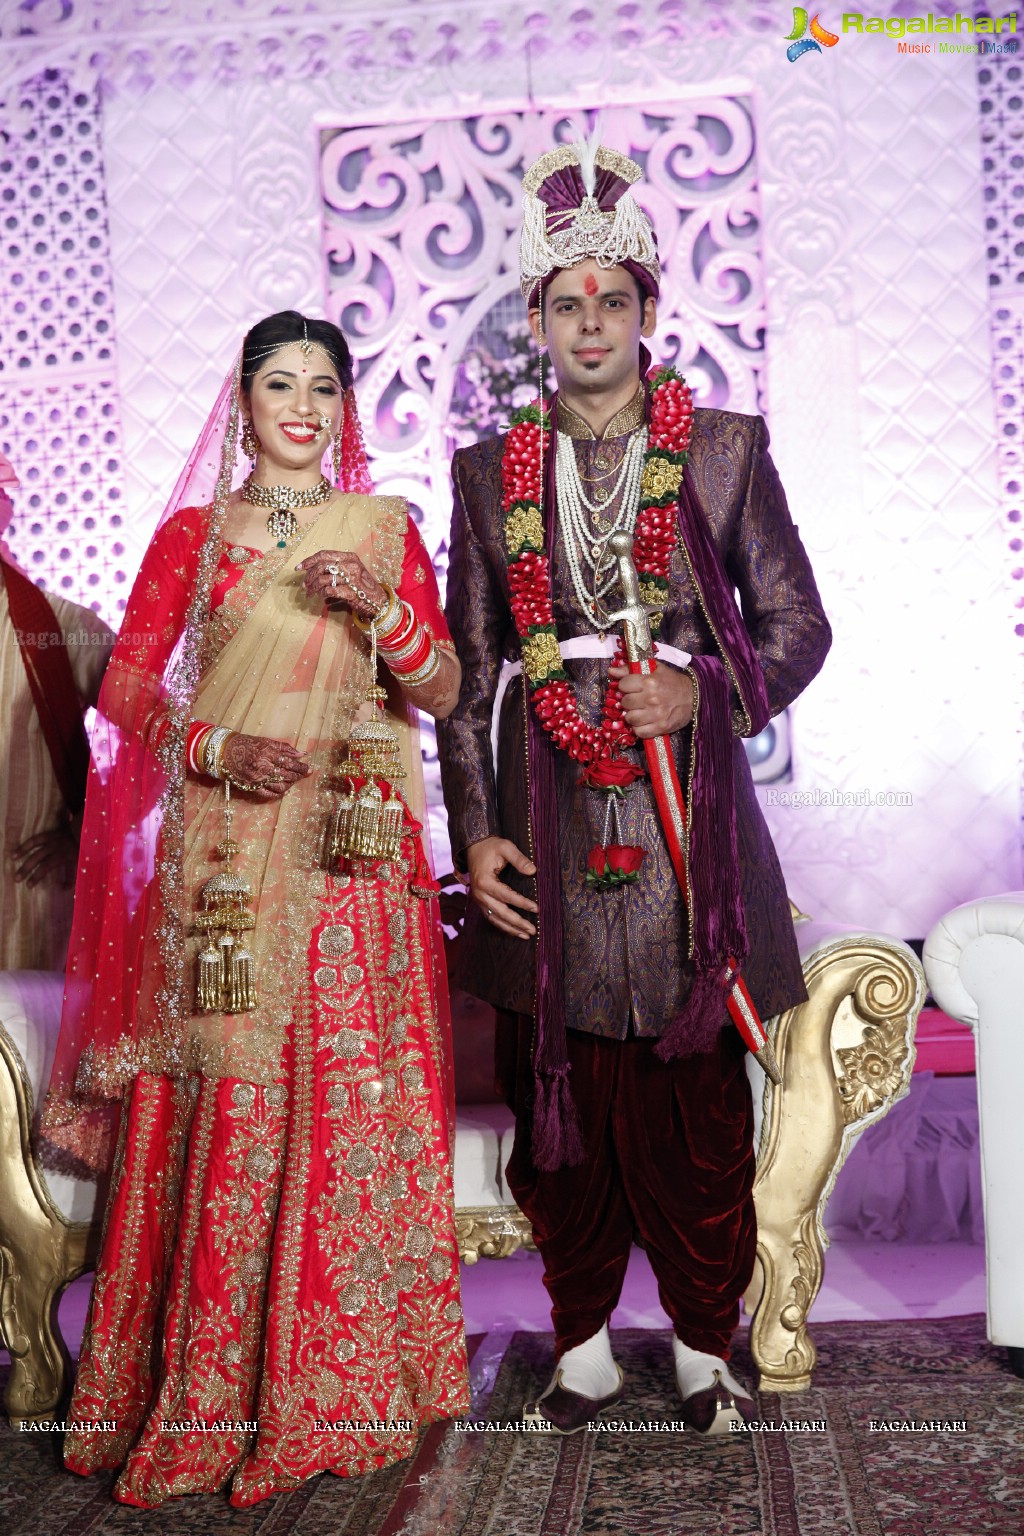 Grand Wedding Ceremony of Disha with Shubham at King's Palace, Hyderabad